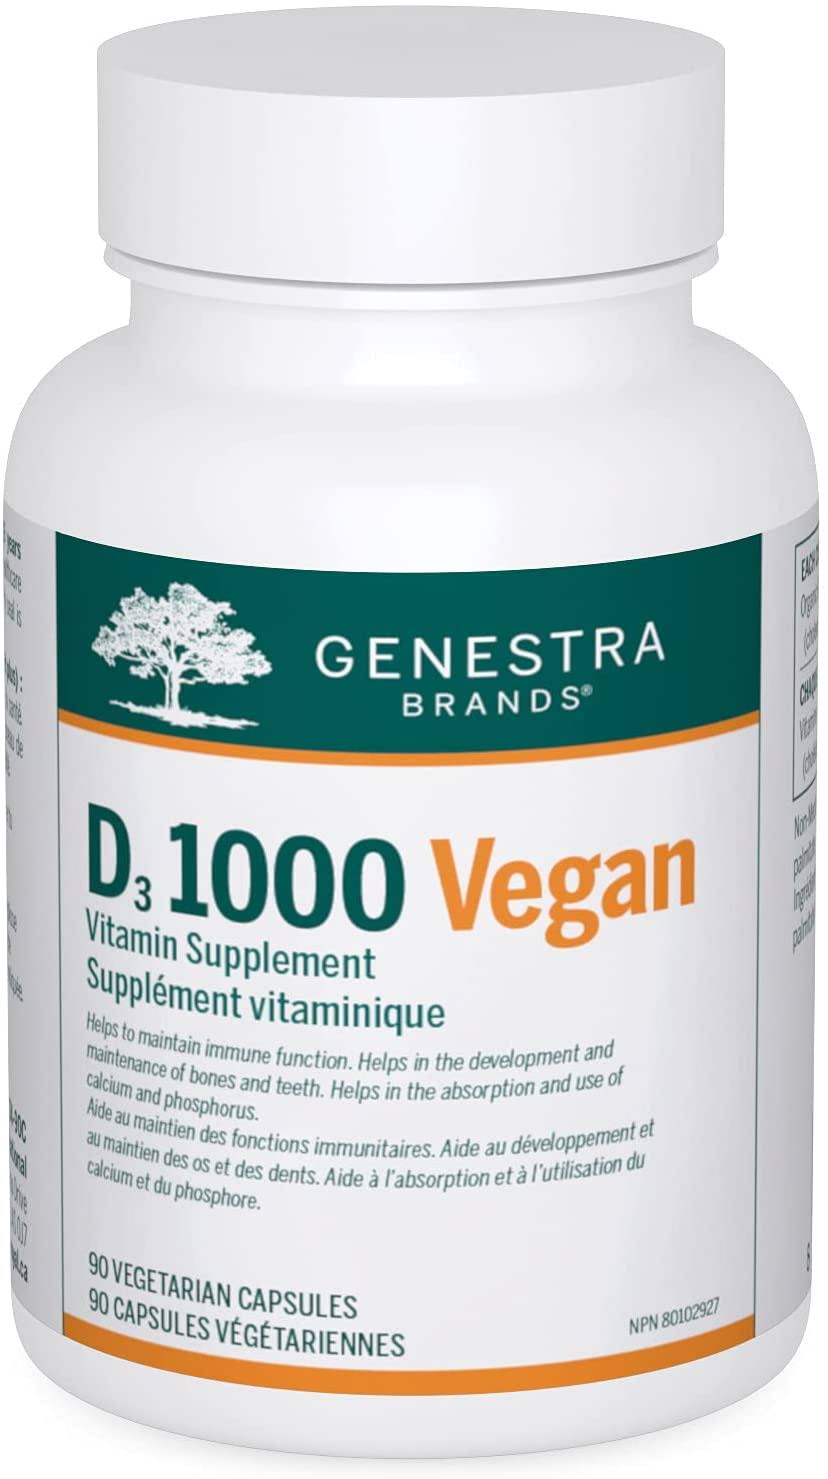 Genestra Brands D3 1000 Vegan